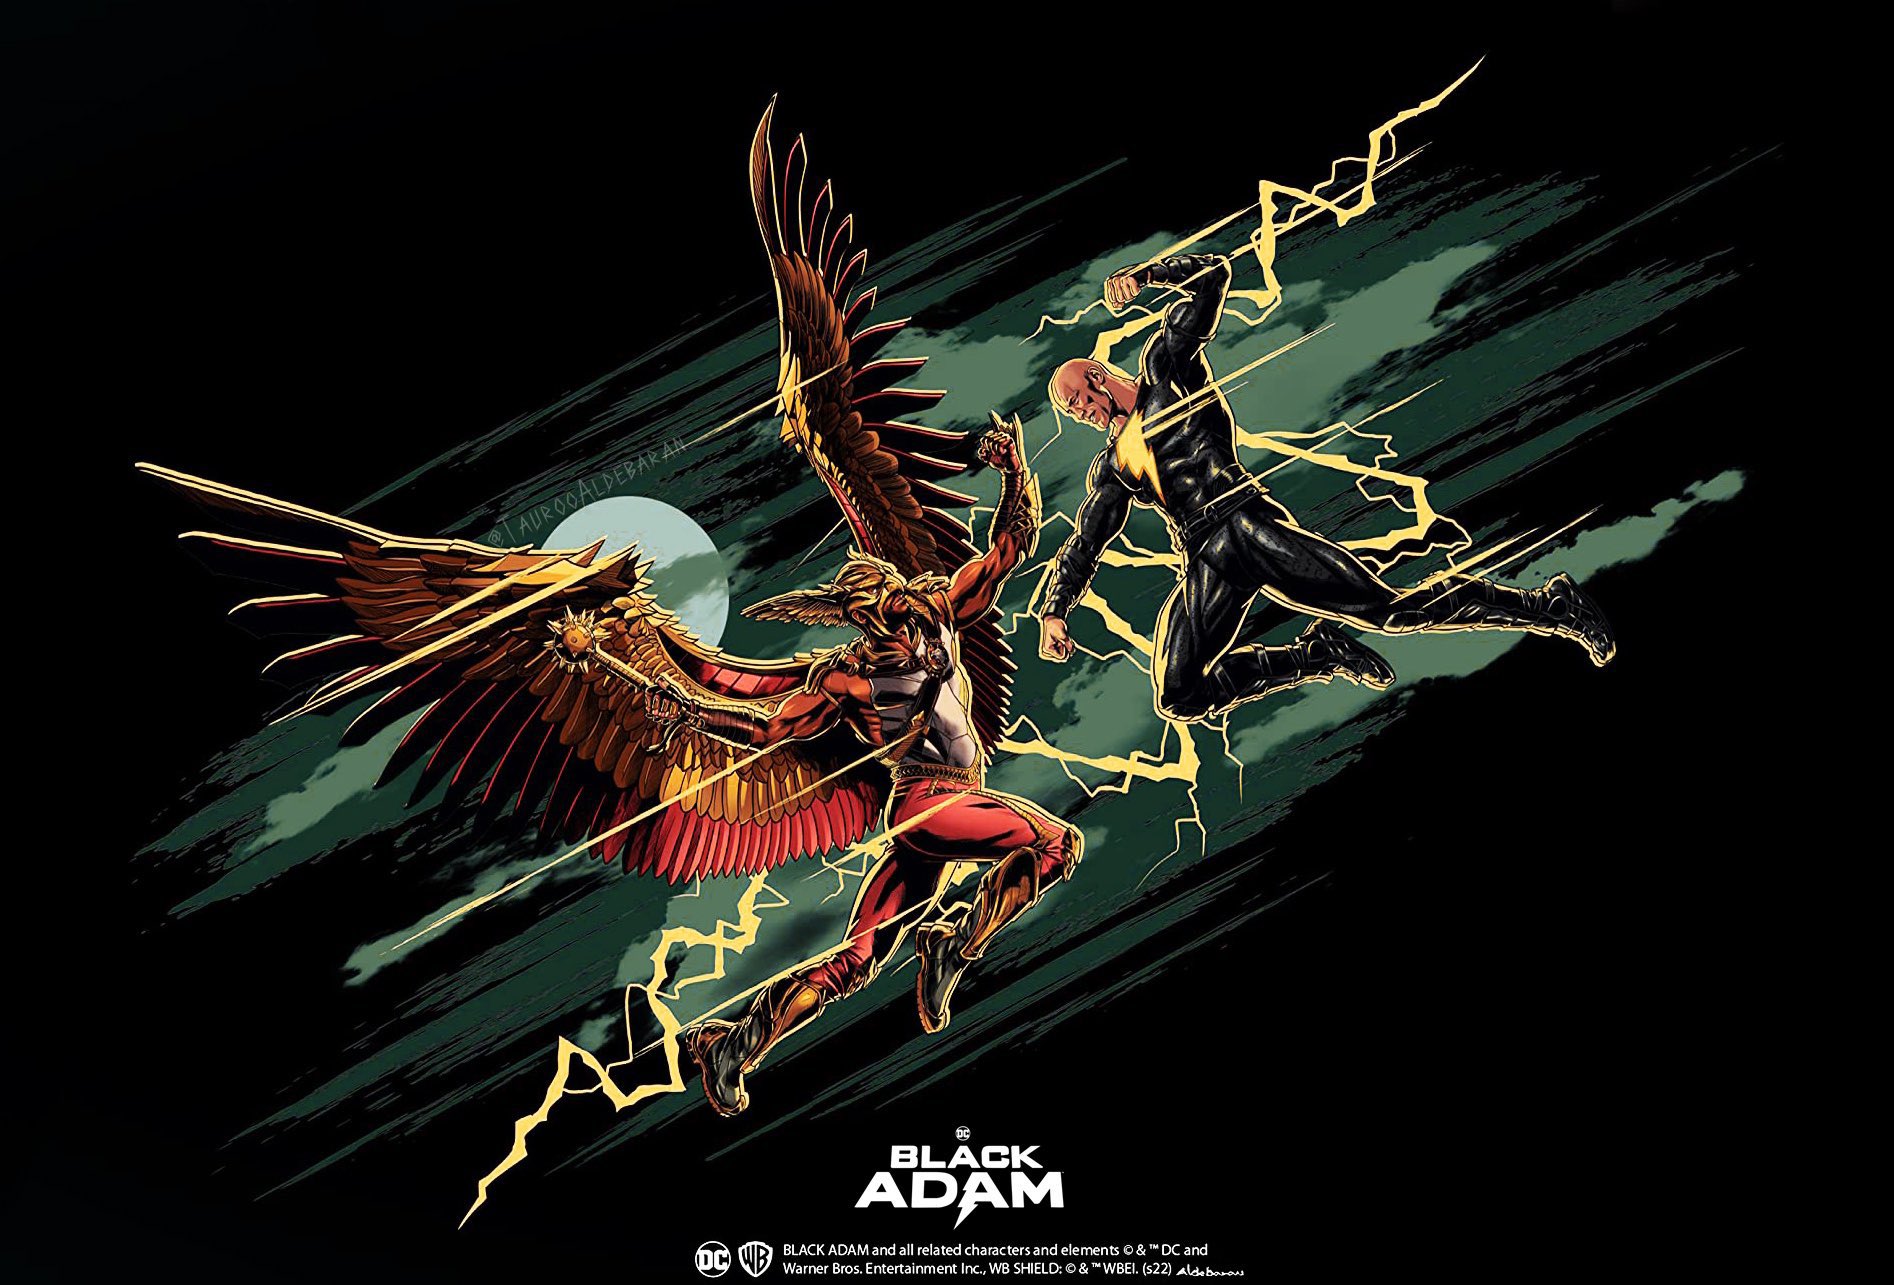 DC超英电影《黑亚当》曝概念海报 首款预告6月8日发布(图1)